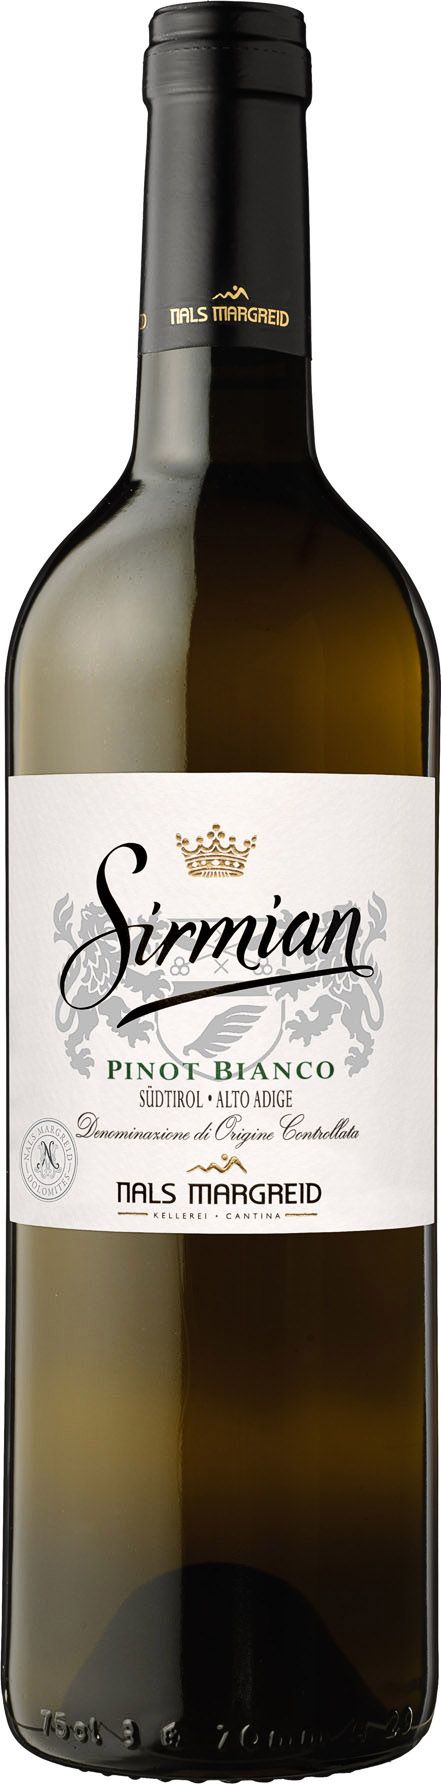 Nals Margreid, Sirmian Pinot Blanco, 2014